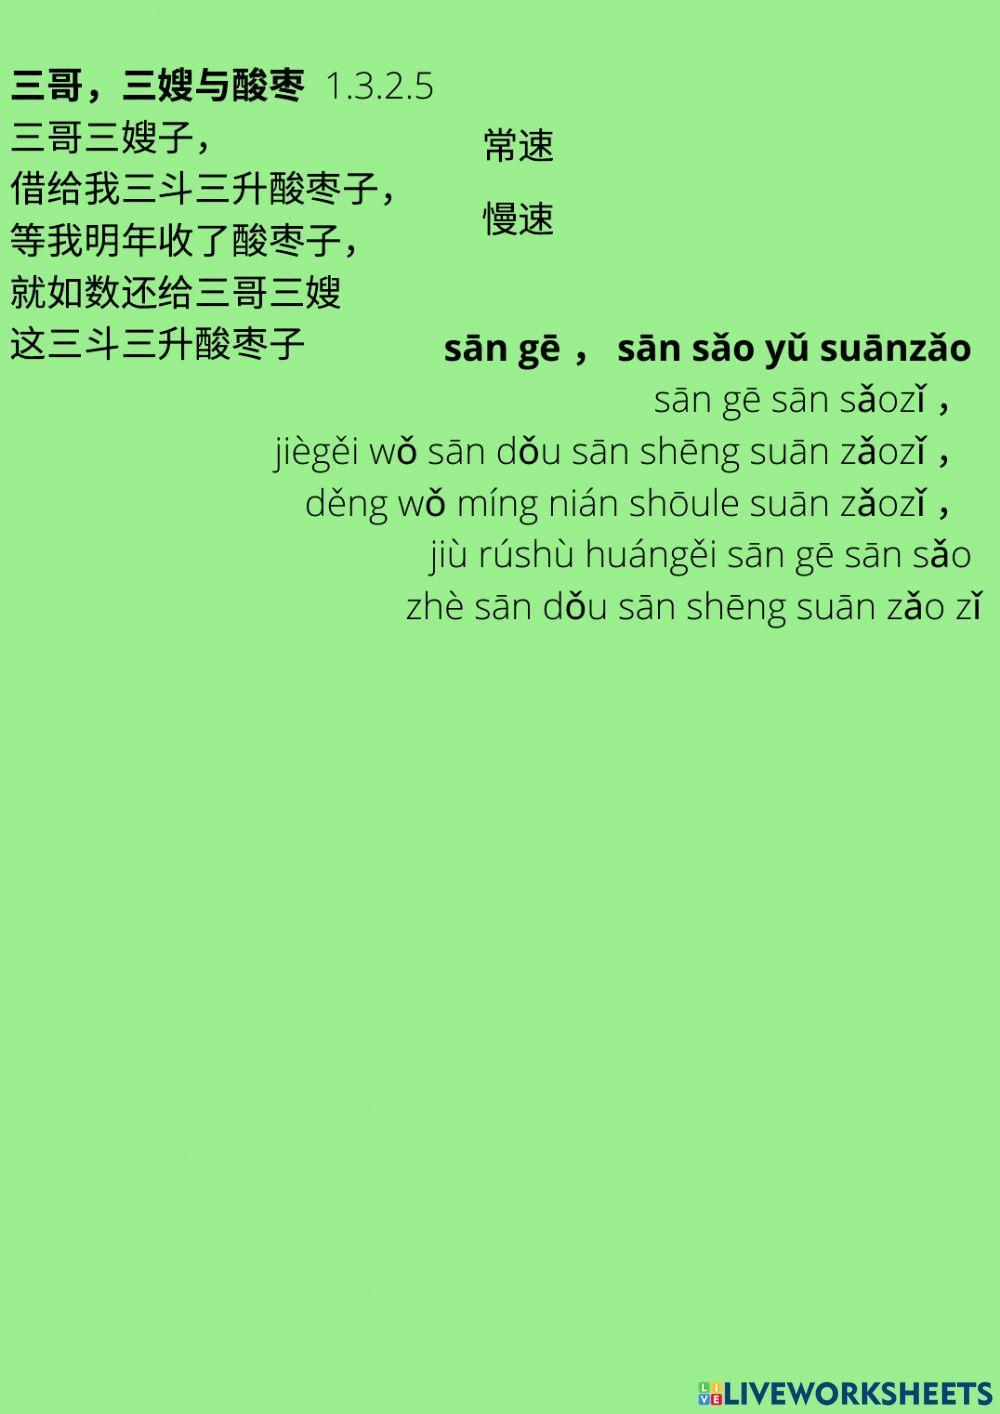 Chinese pinyin z c s